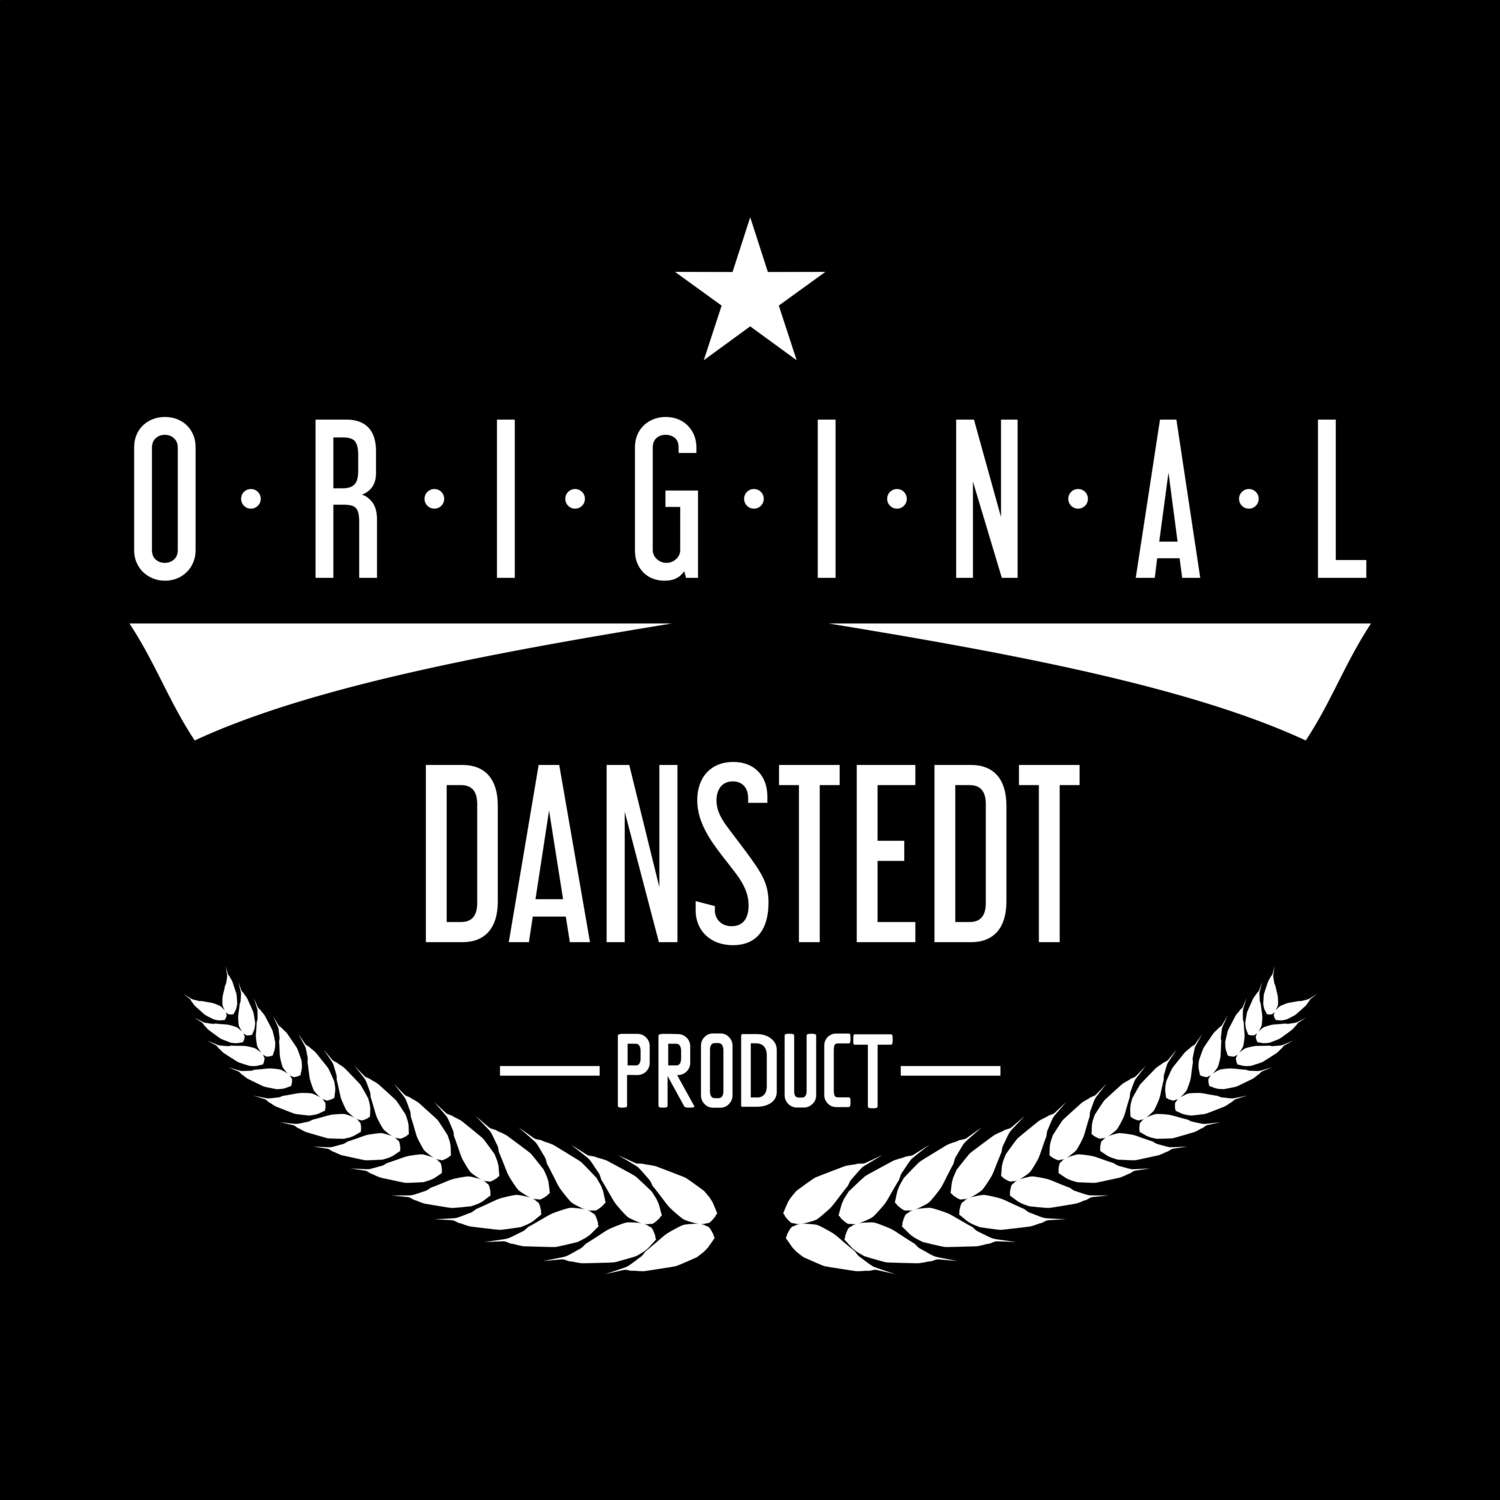 Danstedt T-Shirt »Original Product«